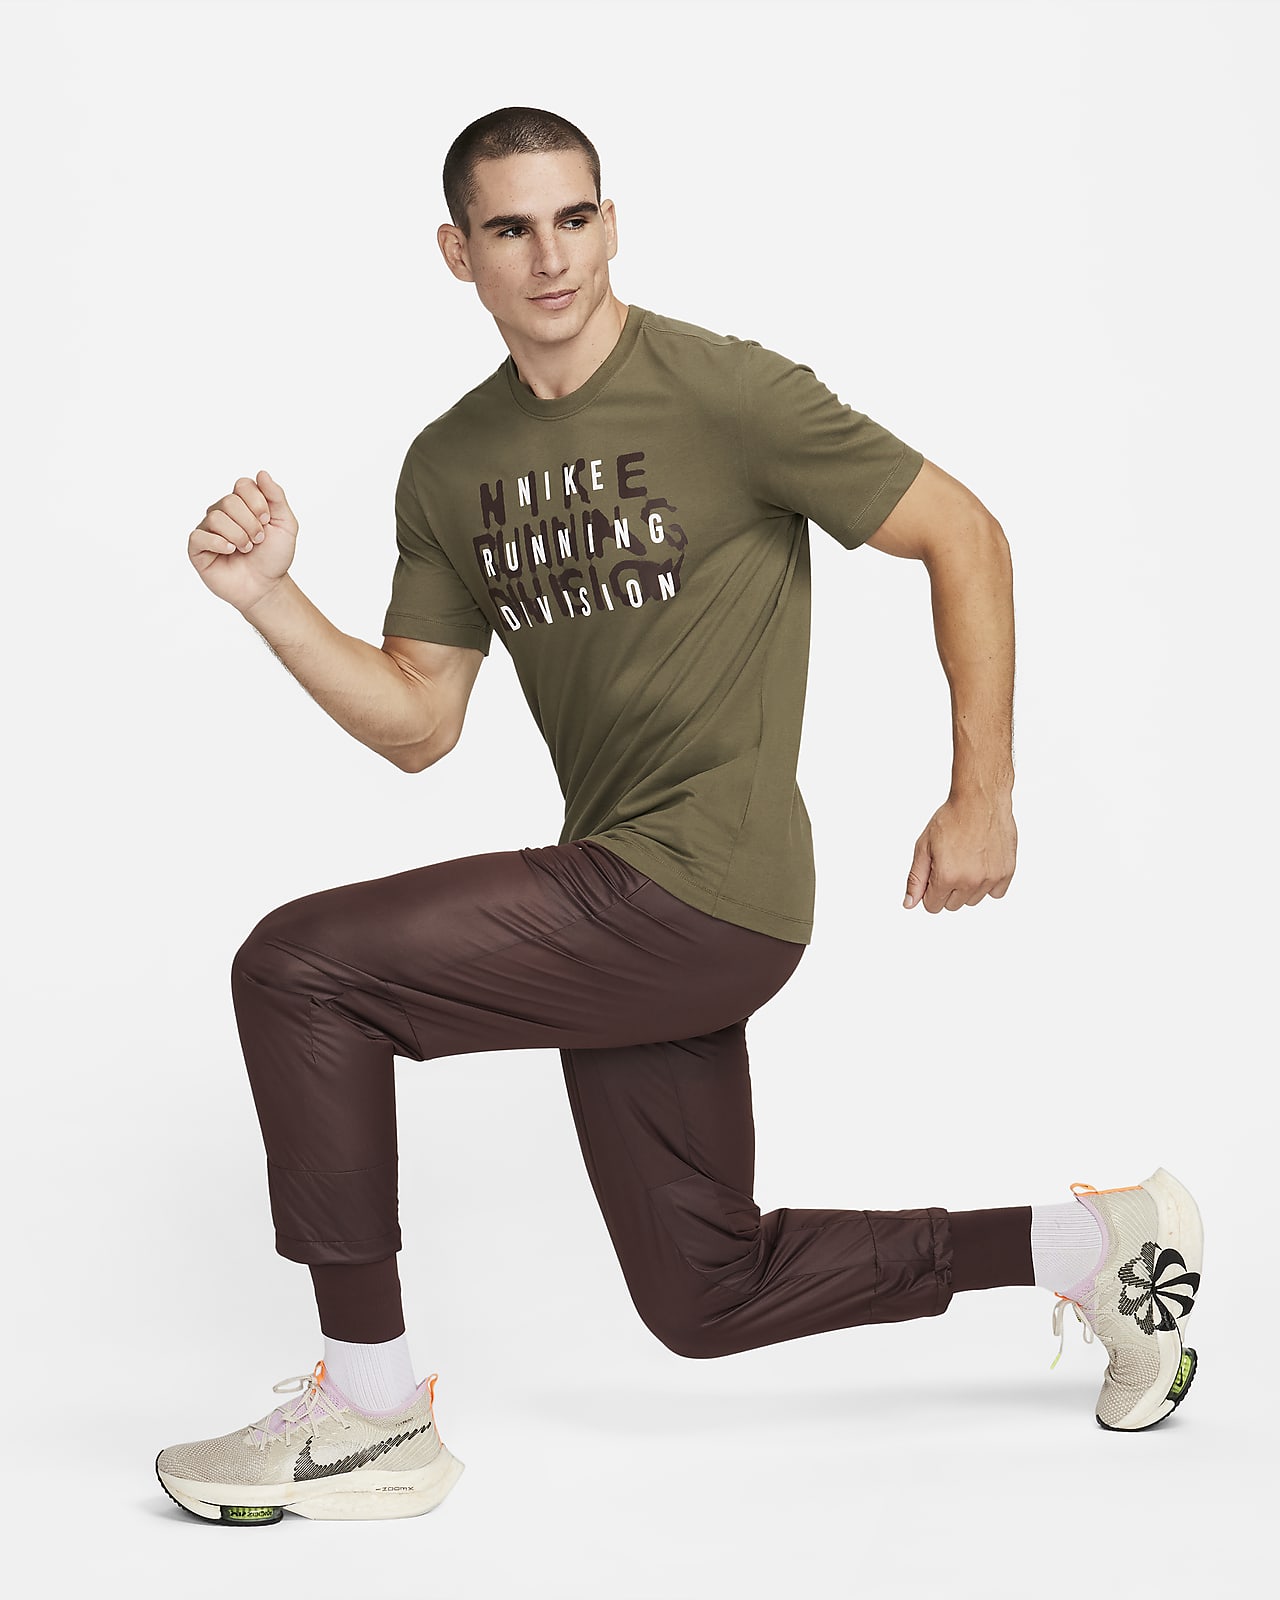 Nike Storm-Fit Run Division Phenom Elite Running Pants - Running tights  Men's, Buy online